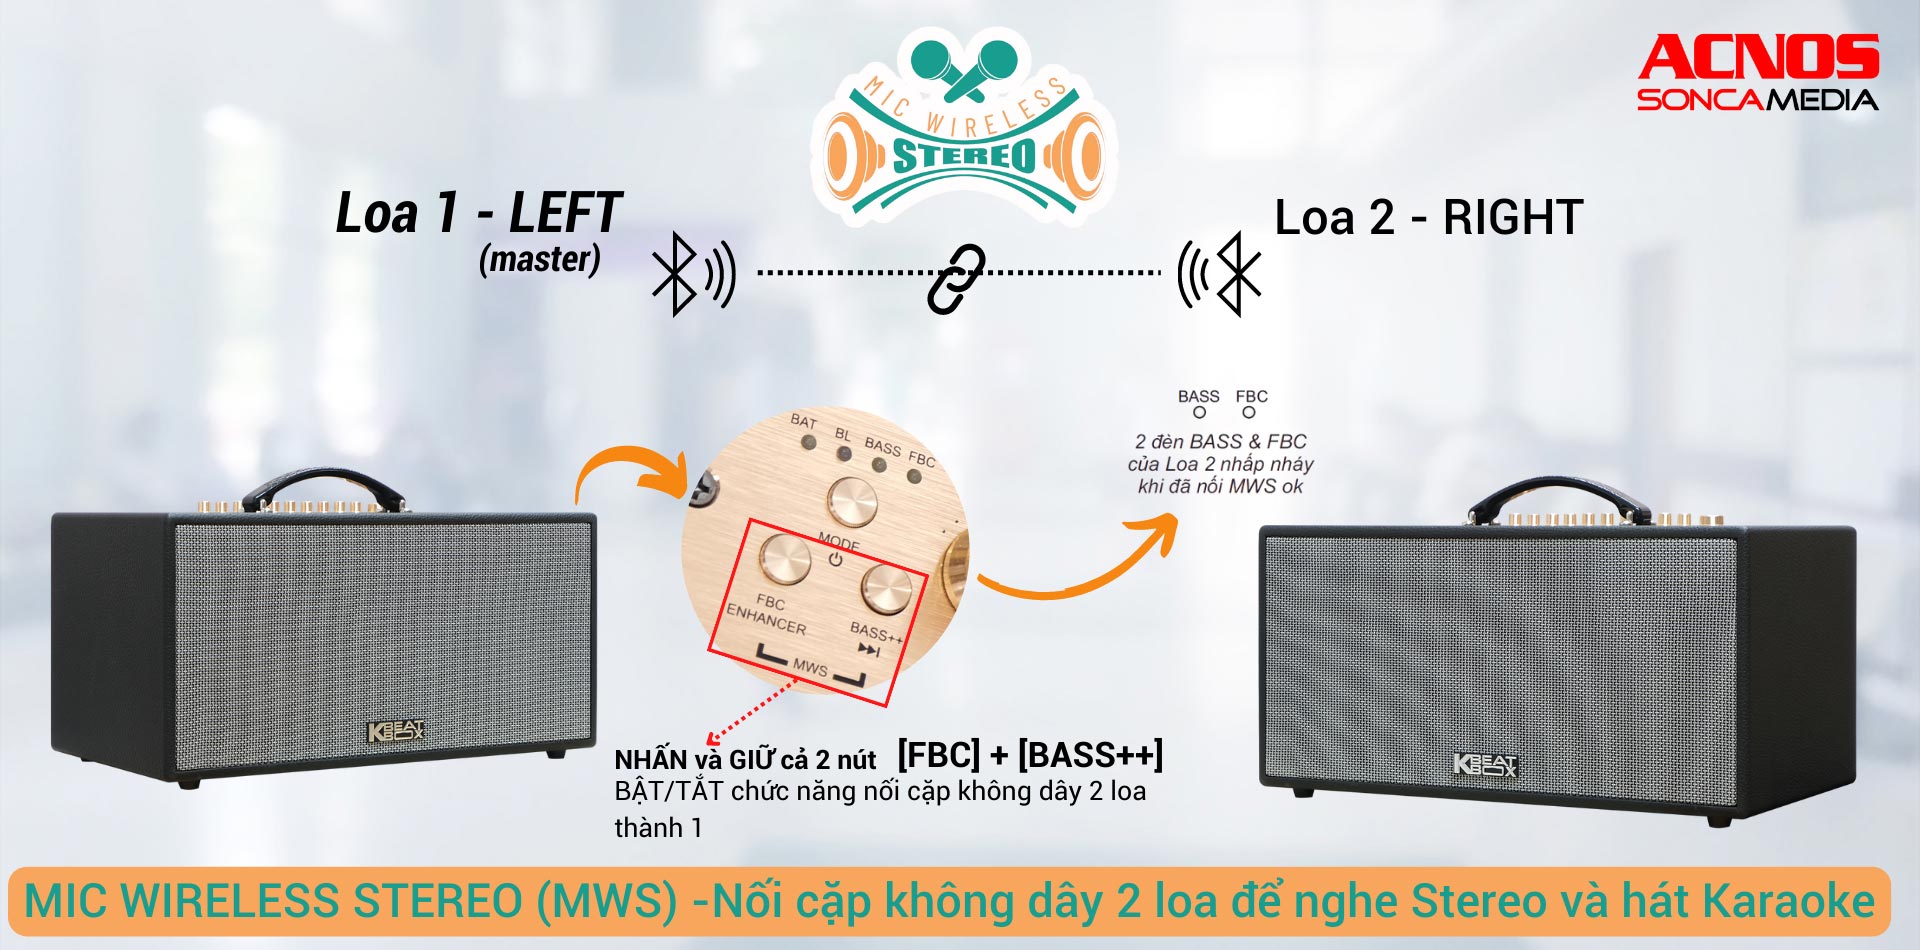 cs450neo-acnos-loa-karaoke-di-dong-bluetooth-mic-wireless-stereo